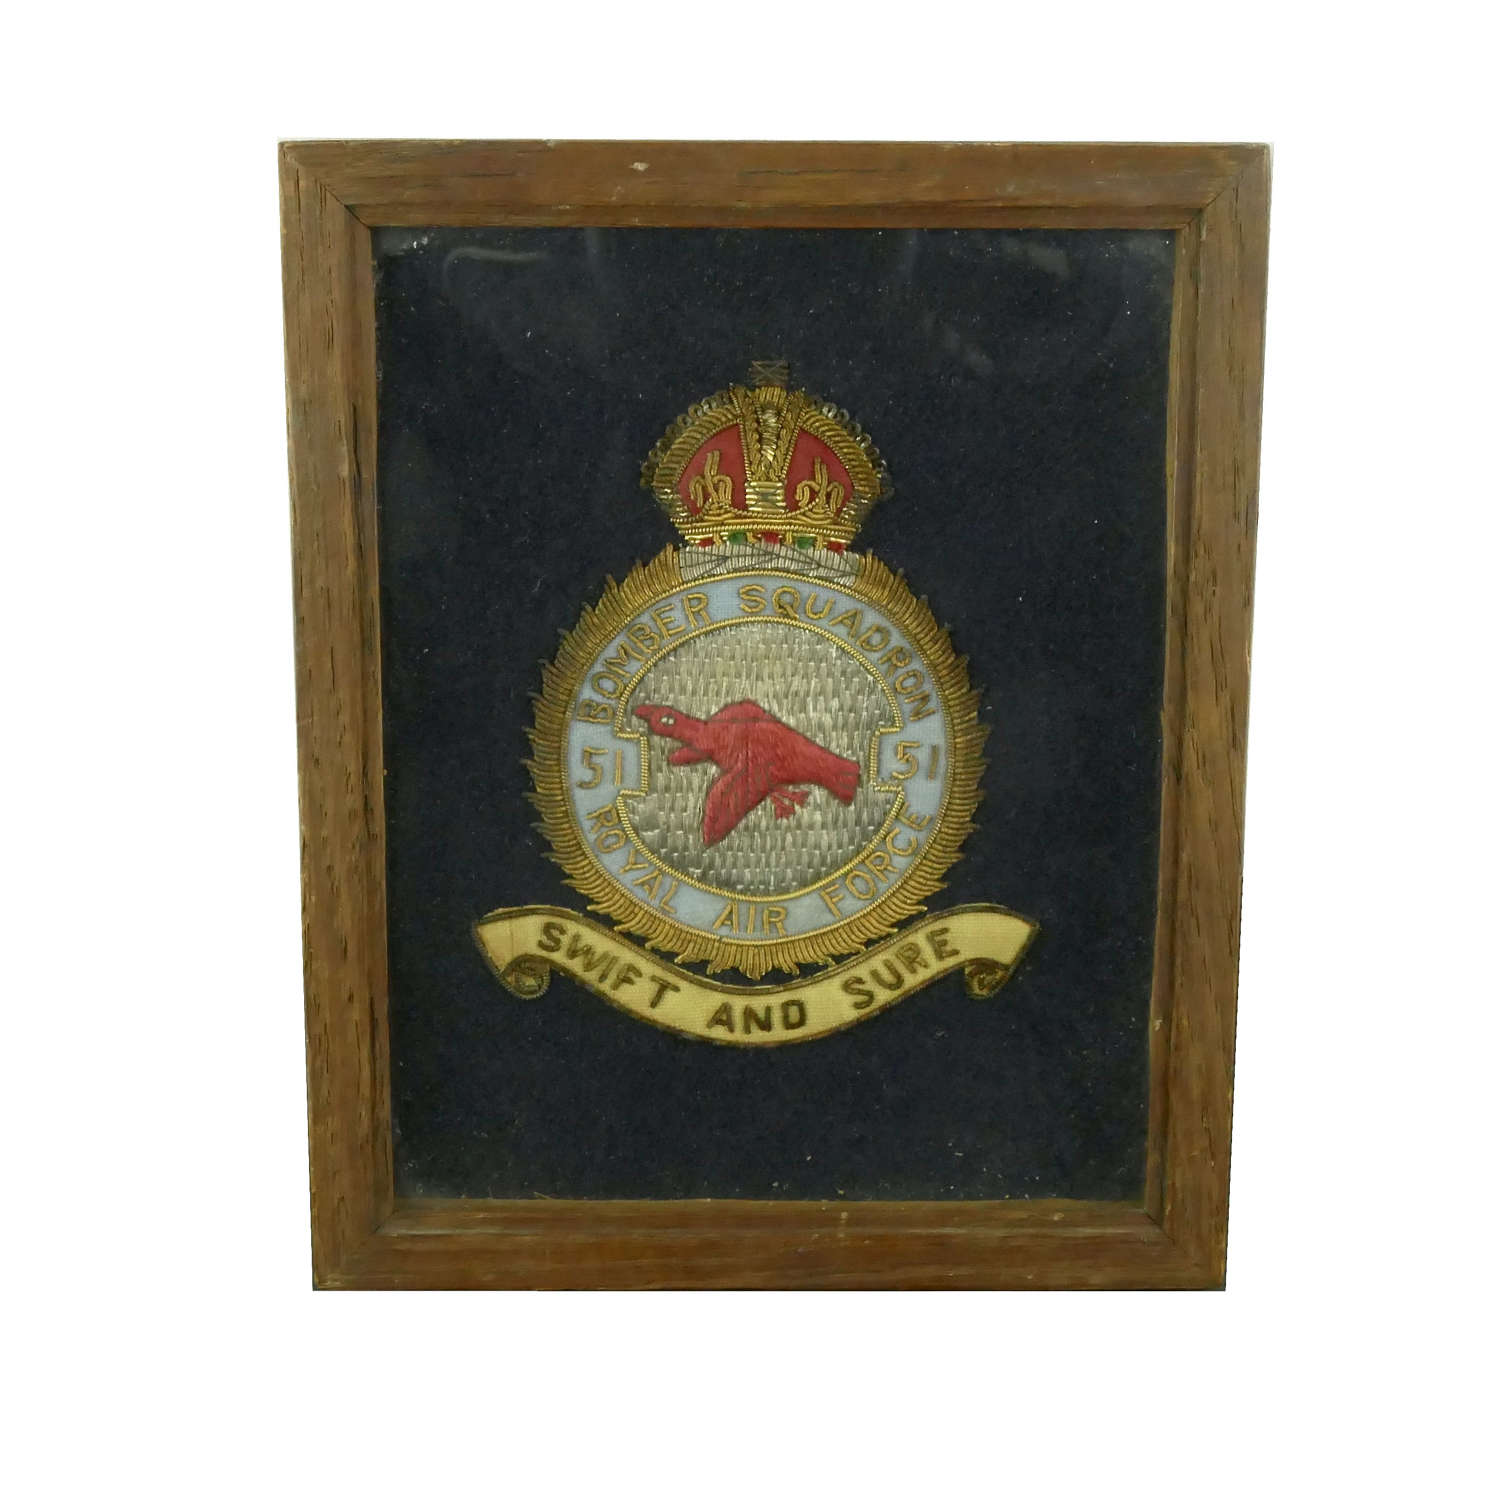 RAF 209 Squadron patch, framed